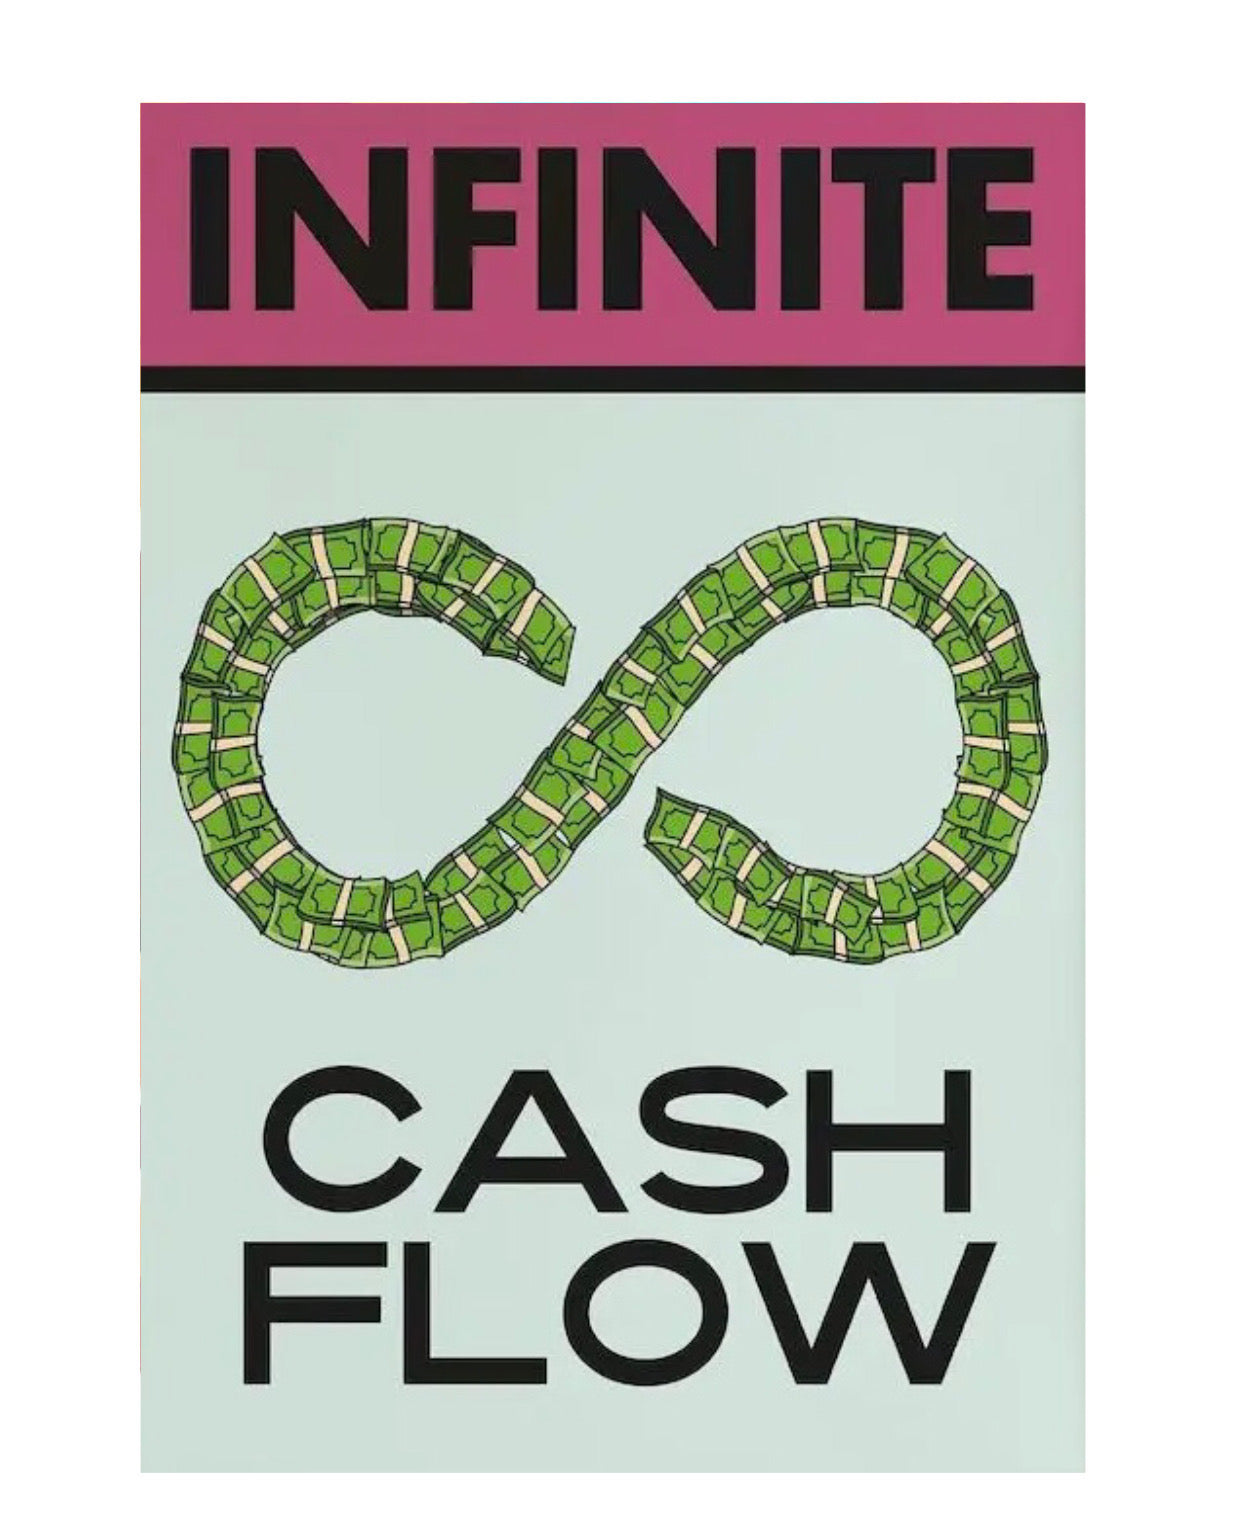 "infinite cash flow" poster